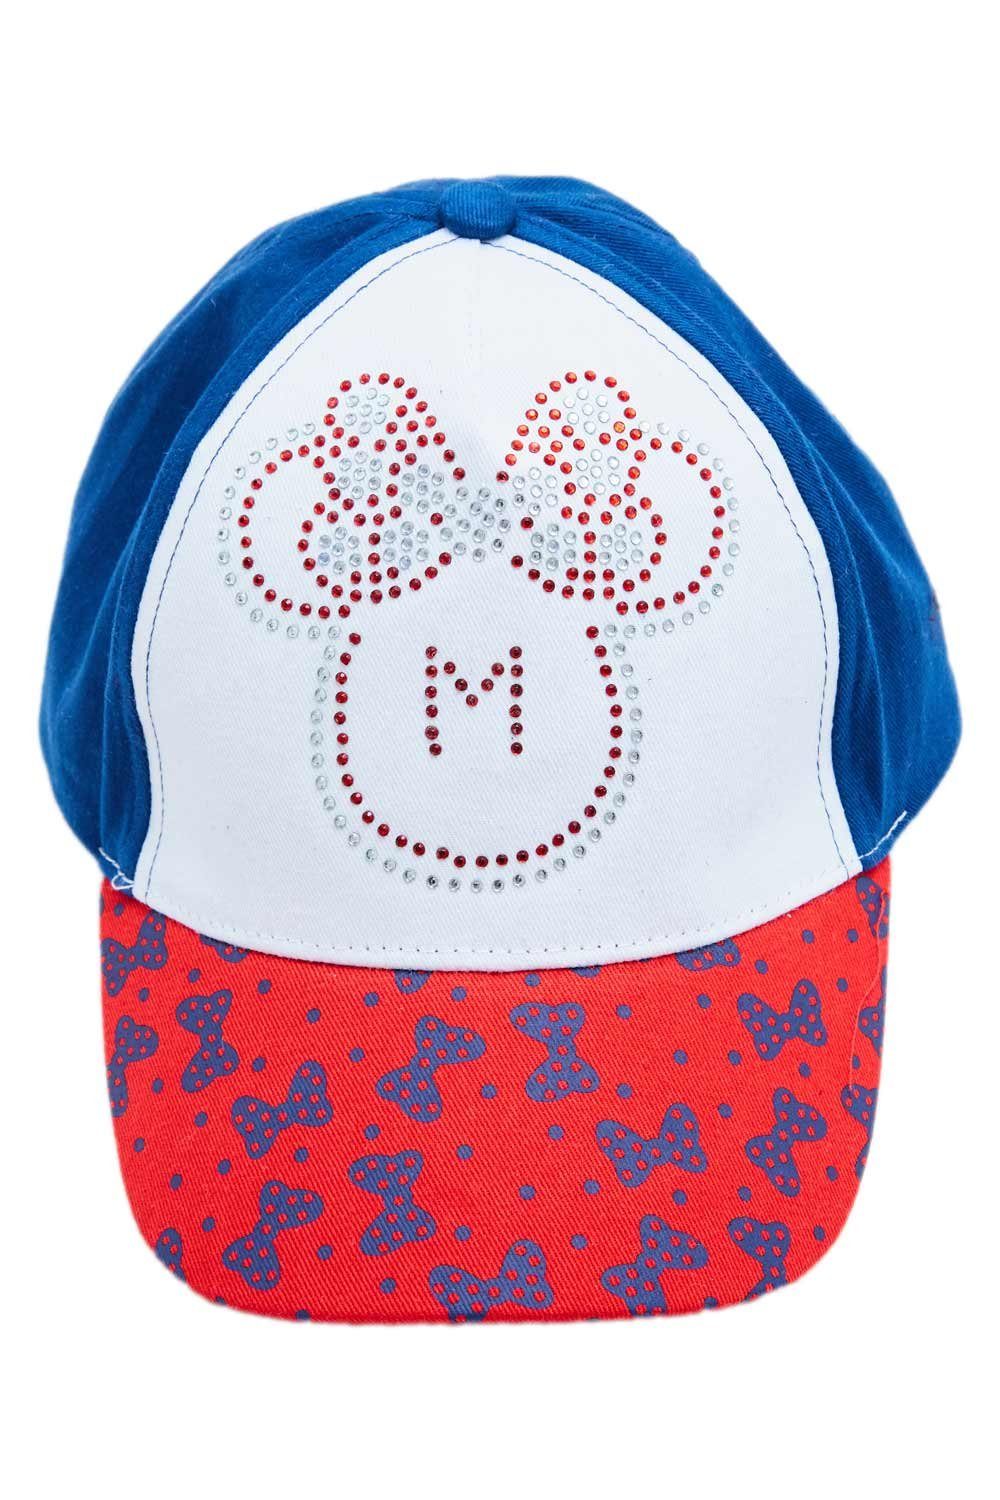 Disney Baseball Cap Disney Minnie 52 Kappe Blau Maus